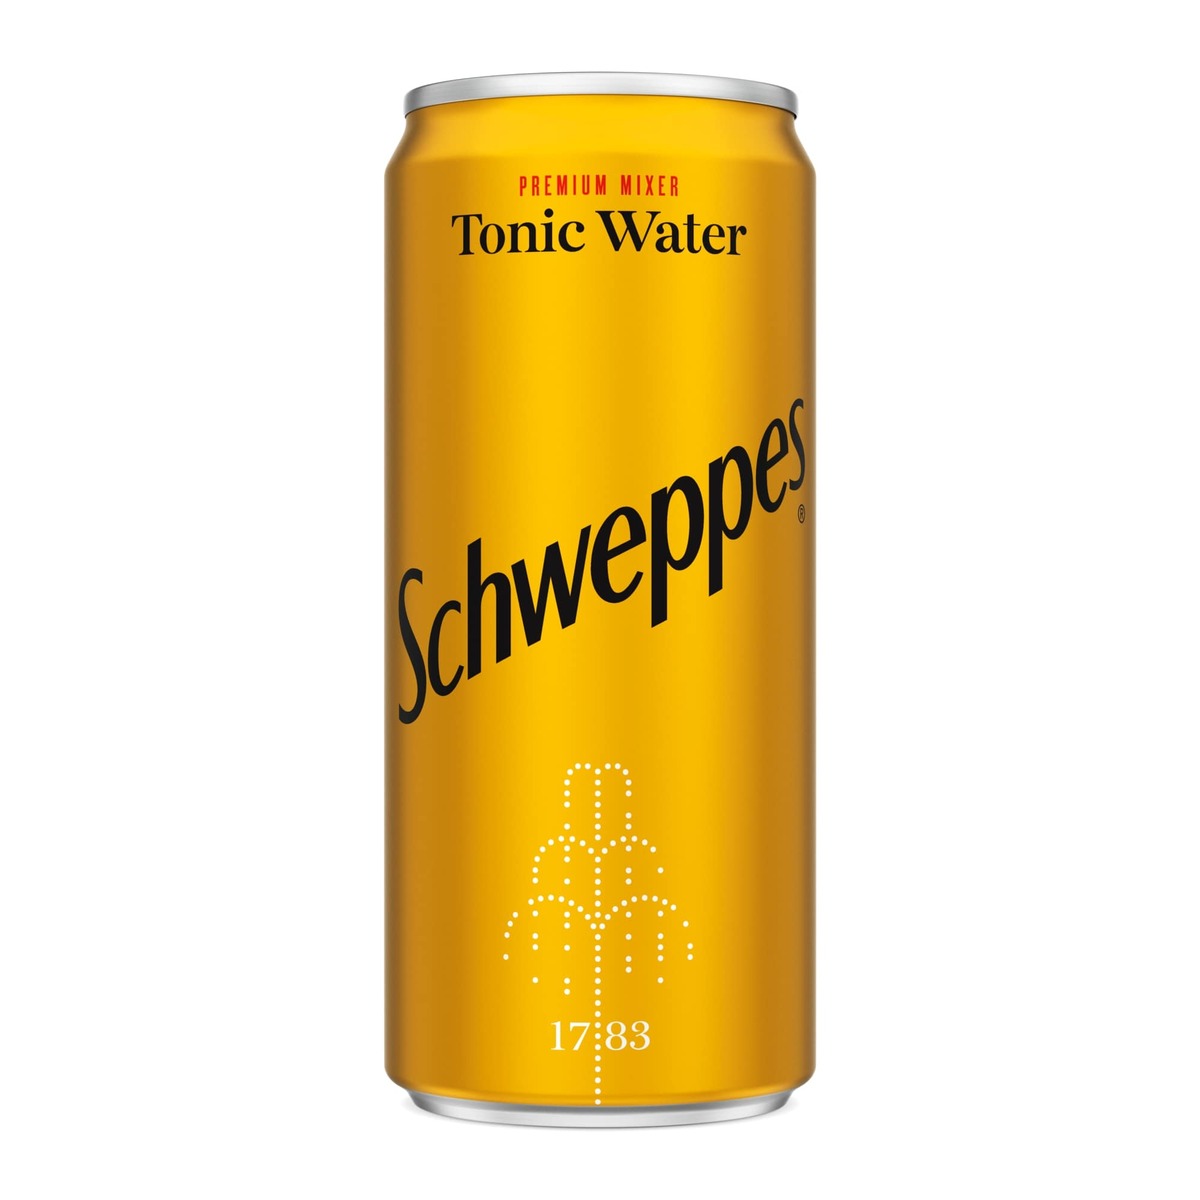 Schweppes Tonic Water 300 ml